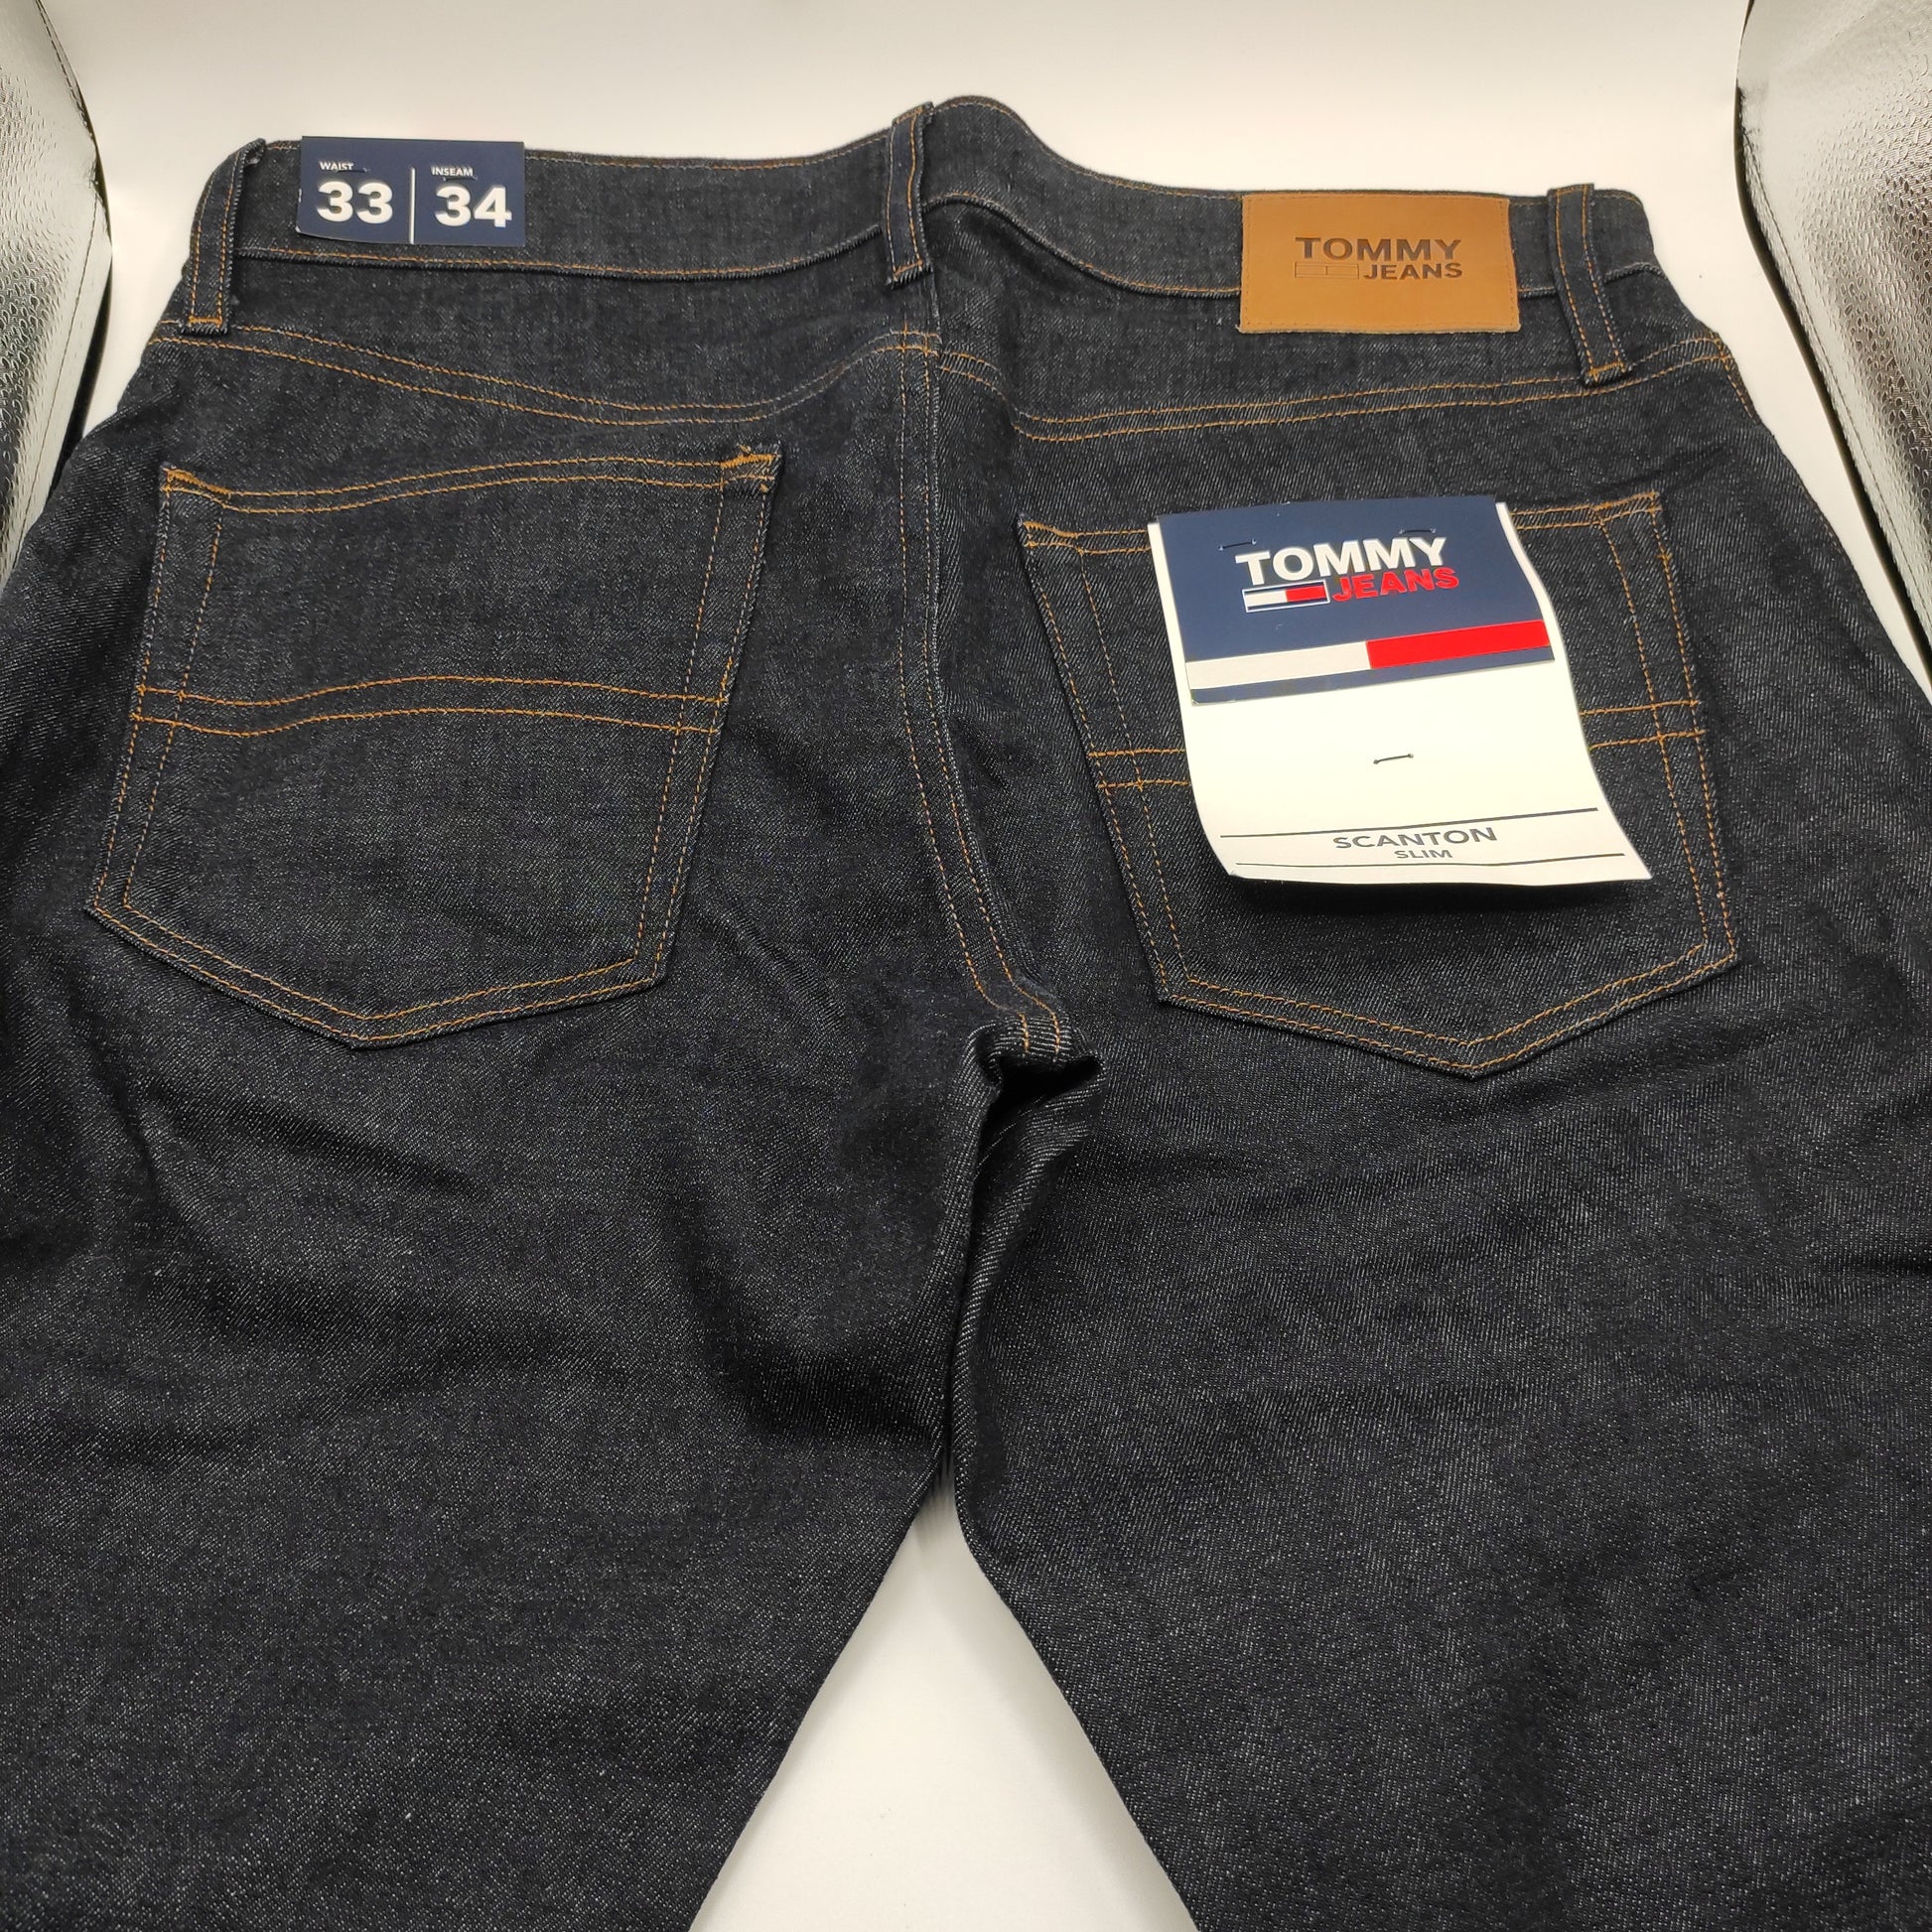 Tommy Jeans Scanton Slim Fit Rinse Comfort Dark Blue W33 L34 - D&D Moda